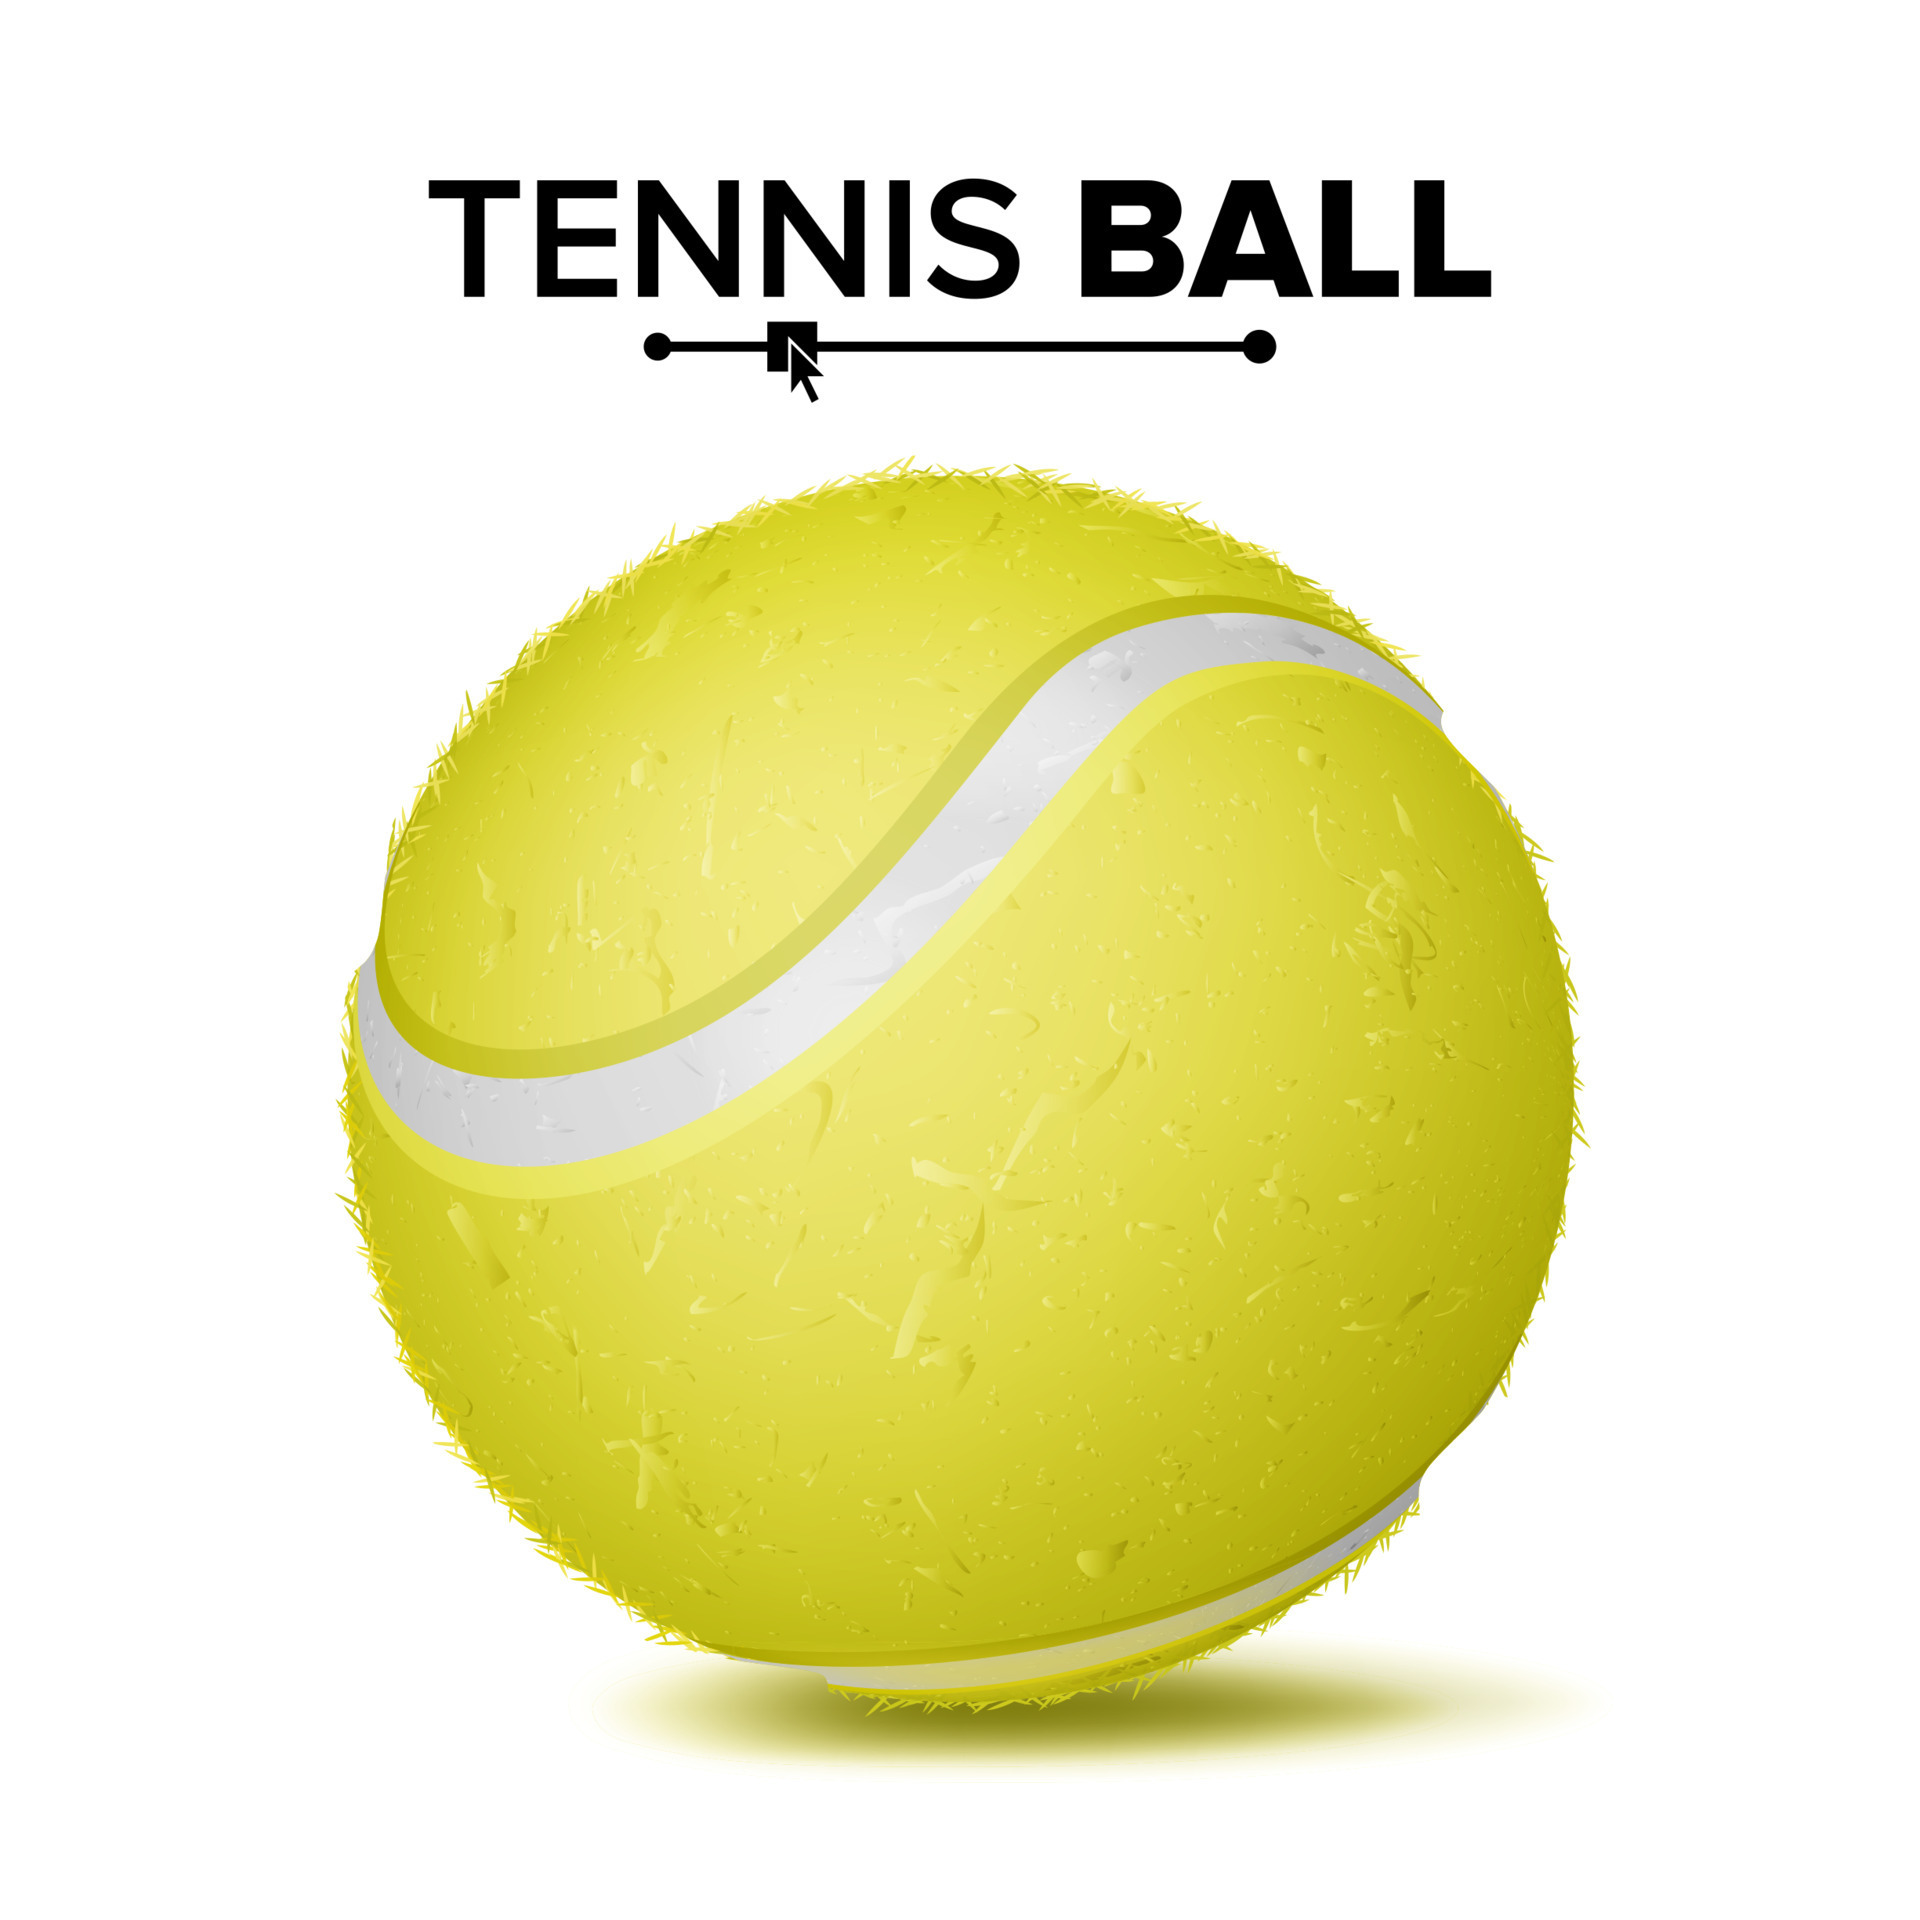 vetor de bola de tênis realista. bola amarela redonda clássica